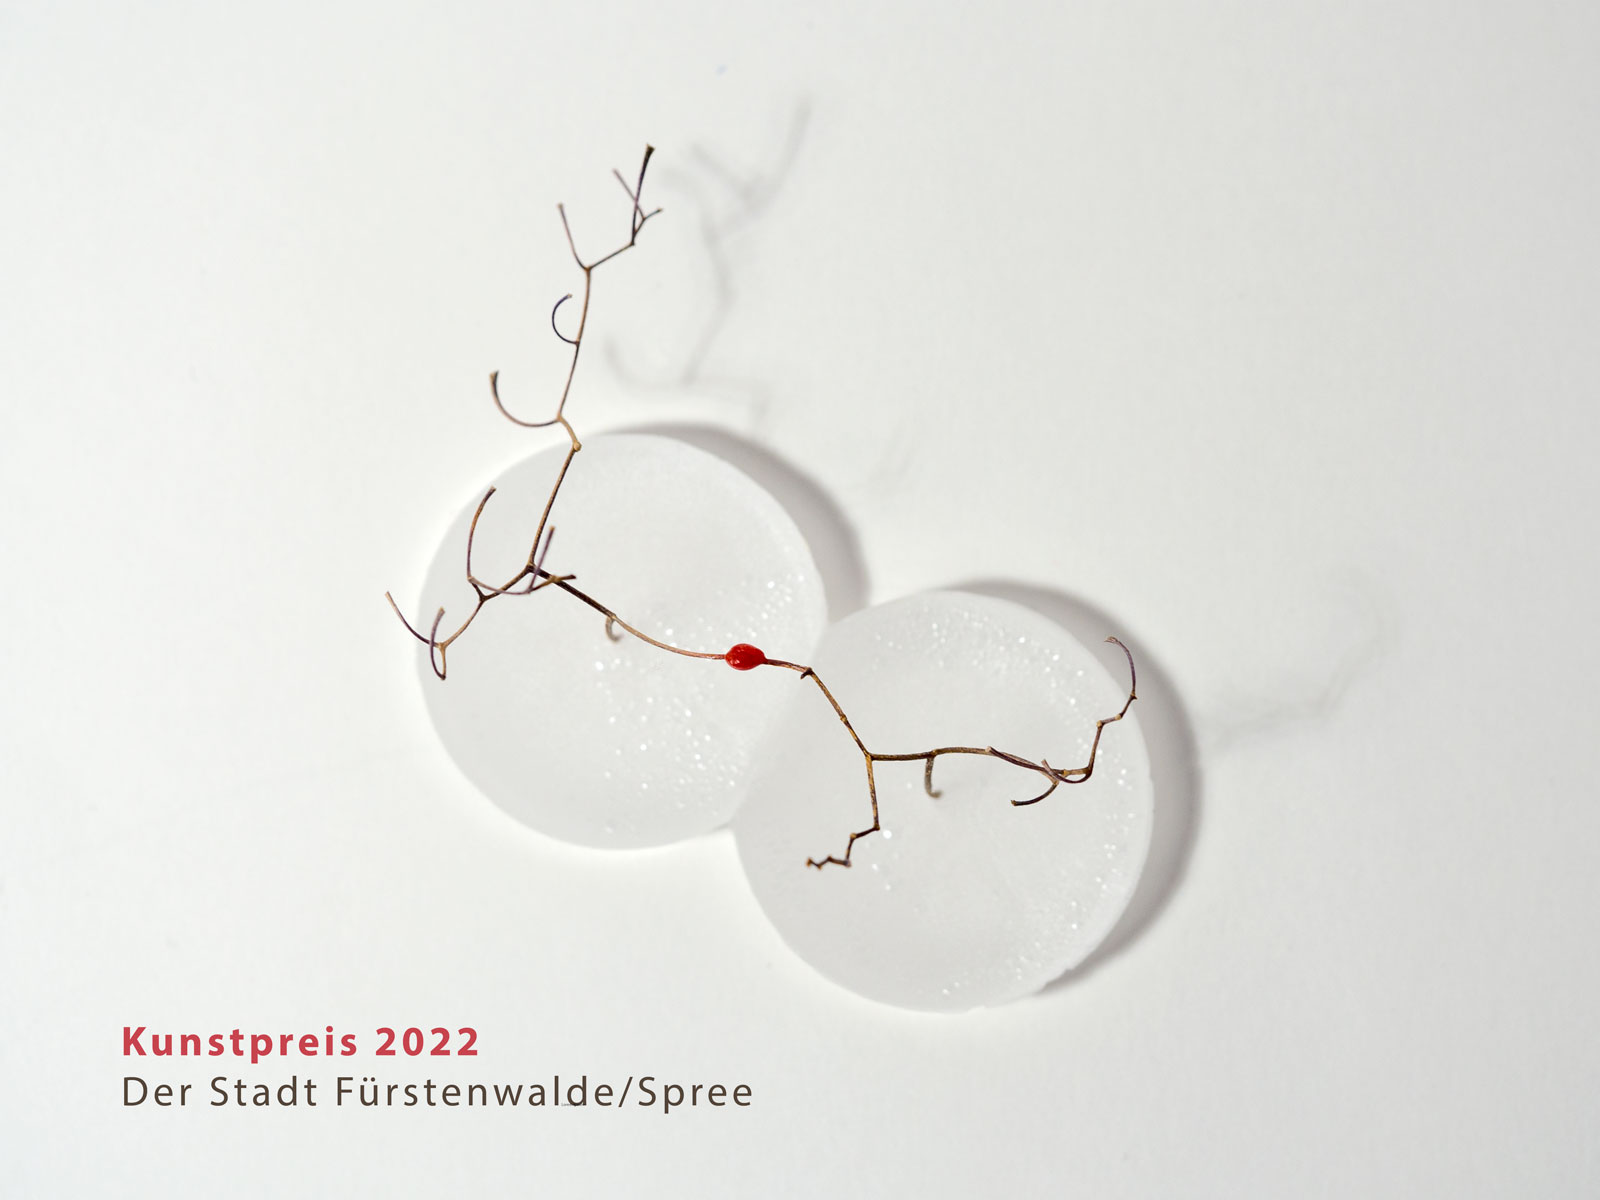 Anja Asche – Experimentelle Künstlerin / experimentel artist / object, installation, drawing / based in Berlin / Germany. Kunstpreis der Stadt Fürstenwalde 2022